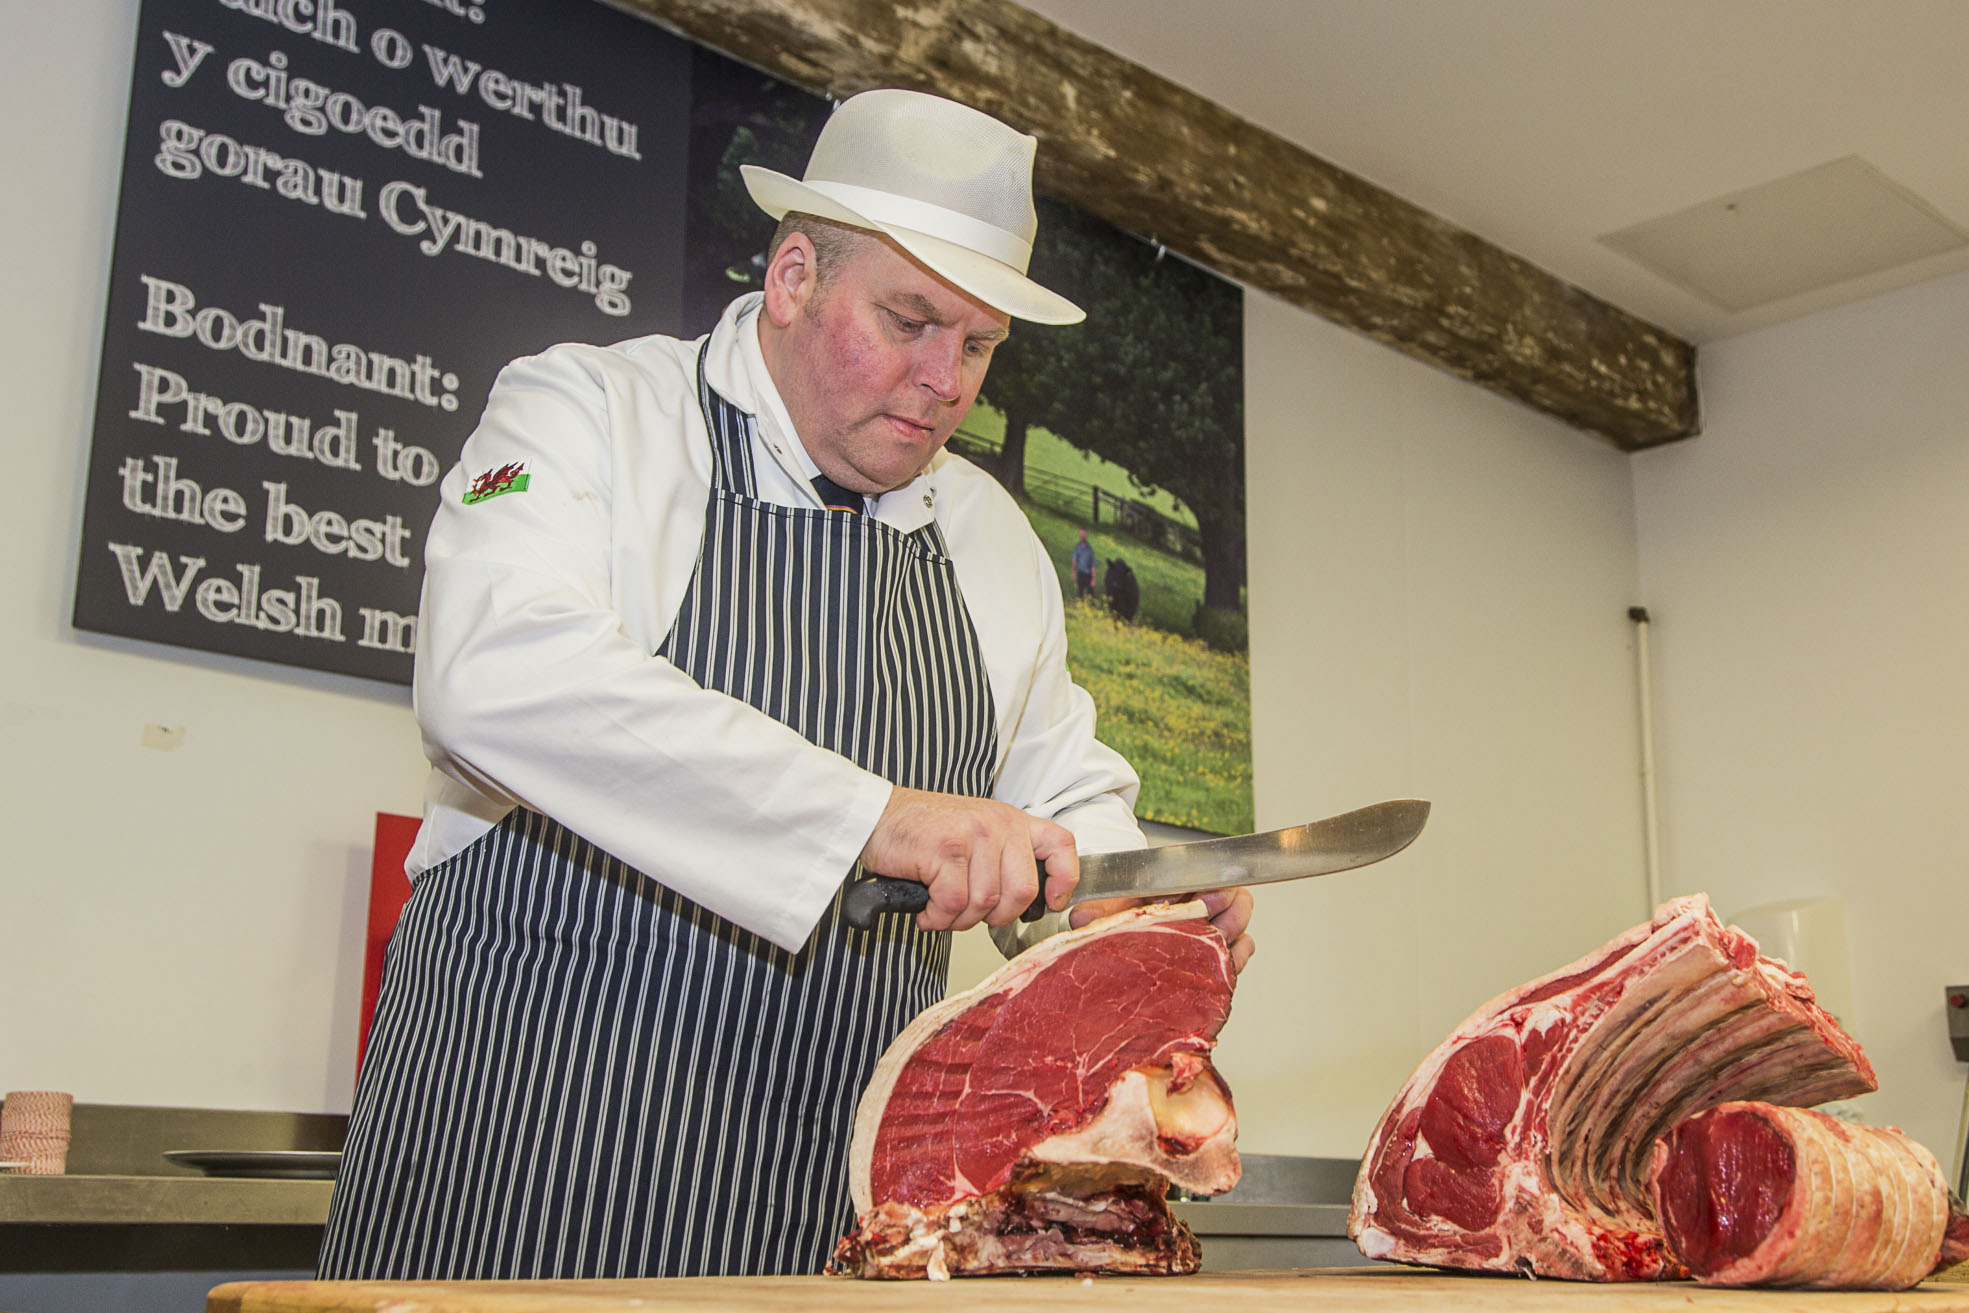 Butcher Jason is Bodnant Welsh Food’s latest recruit